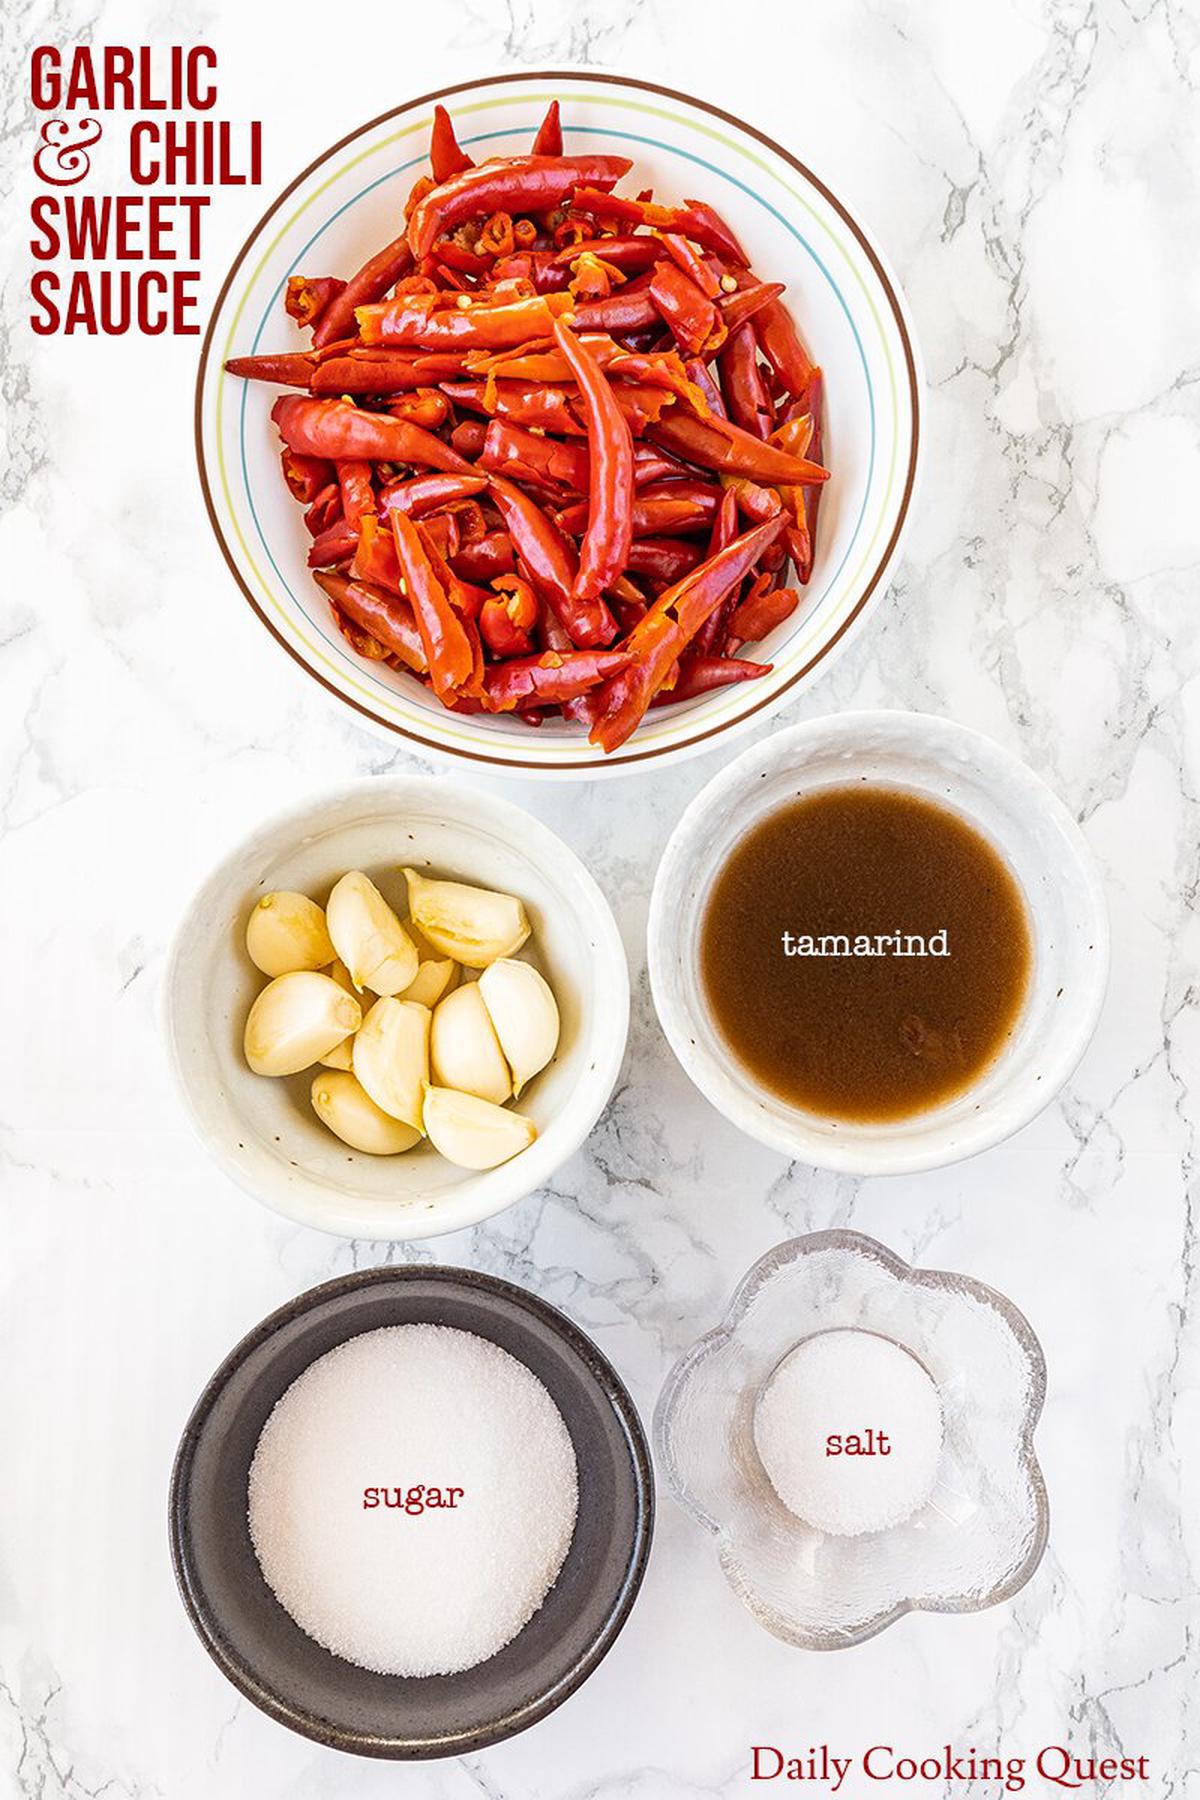 Ingredients for homemade garlic and chili sweet sauce: red chilies, garlic, tamarind, salt, and sugar.